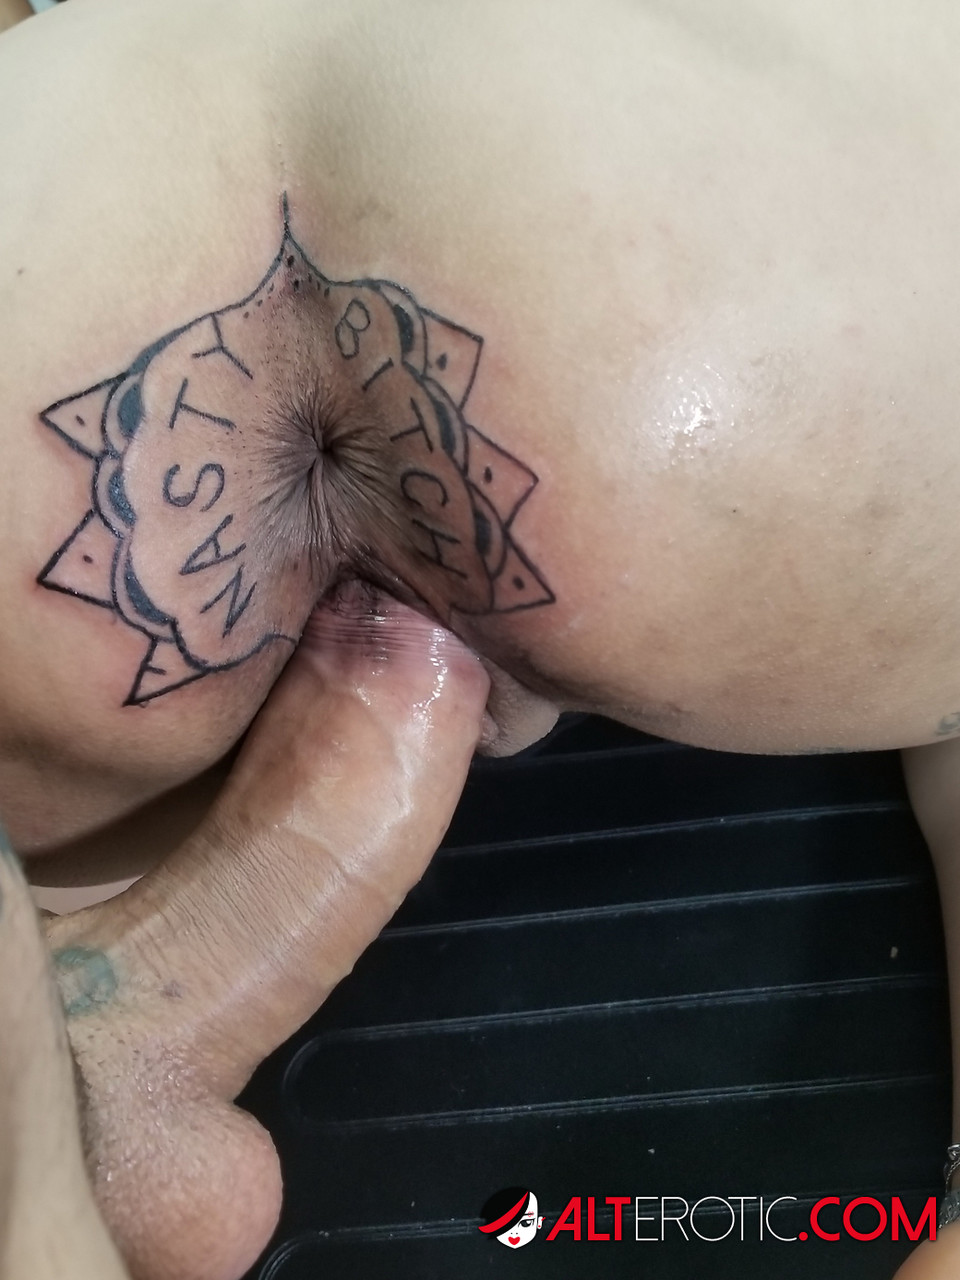 Latina chick Kitty Jaguar gets a butt tattoo before being fucked порно фото #424168461 | Alt Erotic Pics, Kitty Jaguar, Tattoo, мобильное порно